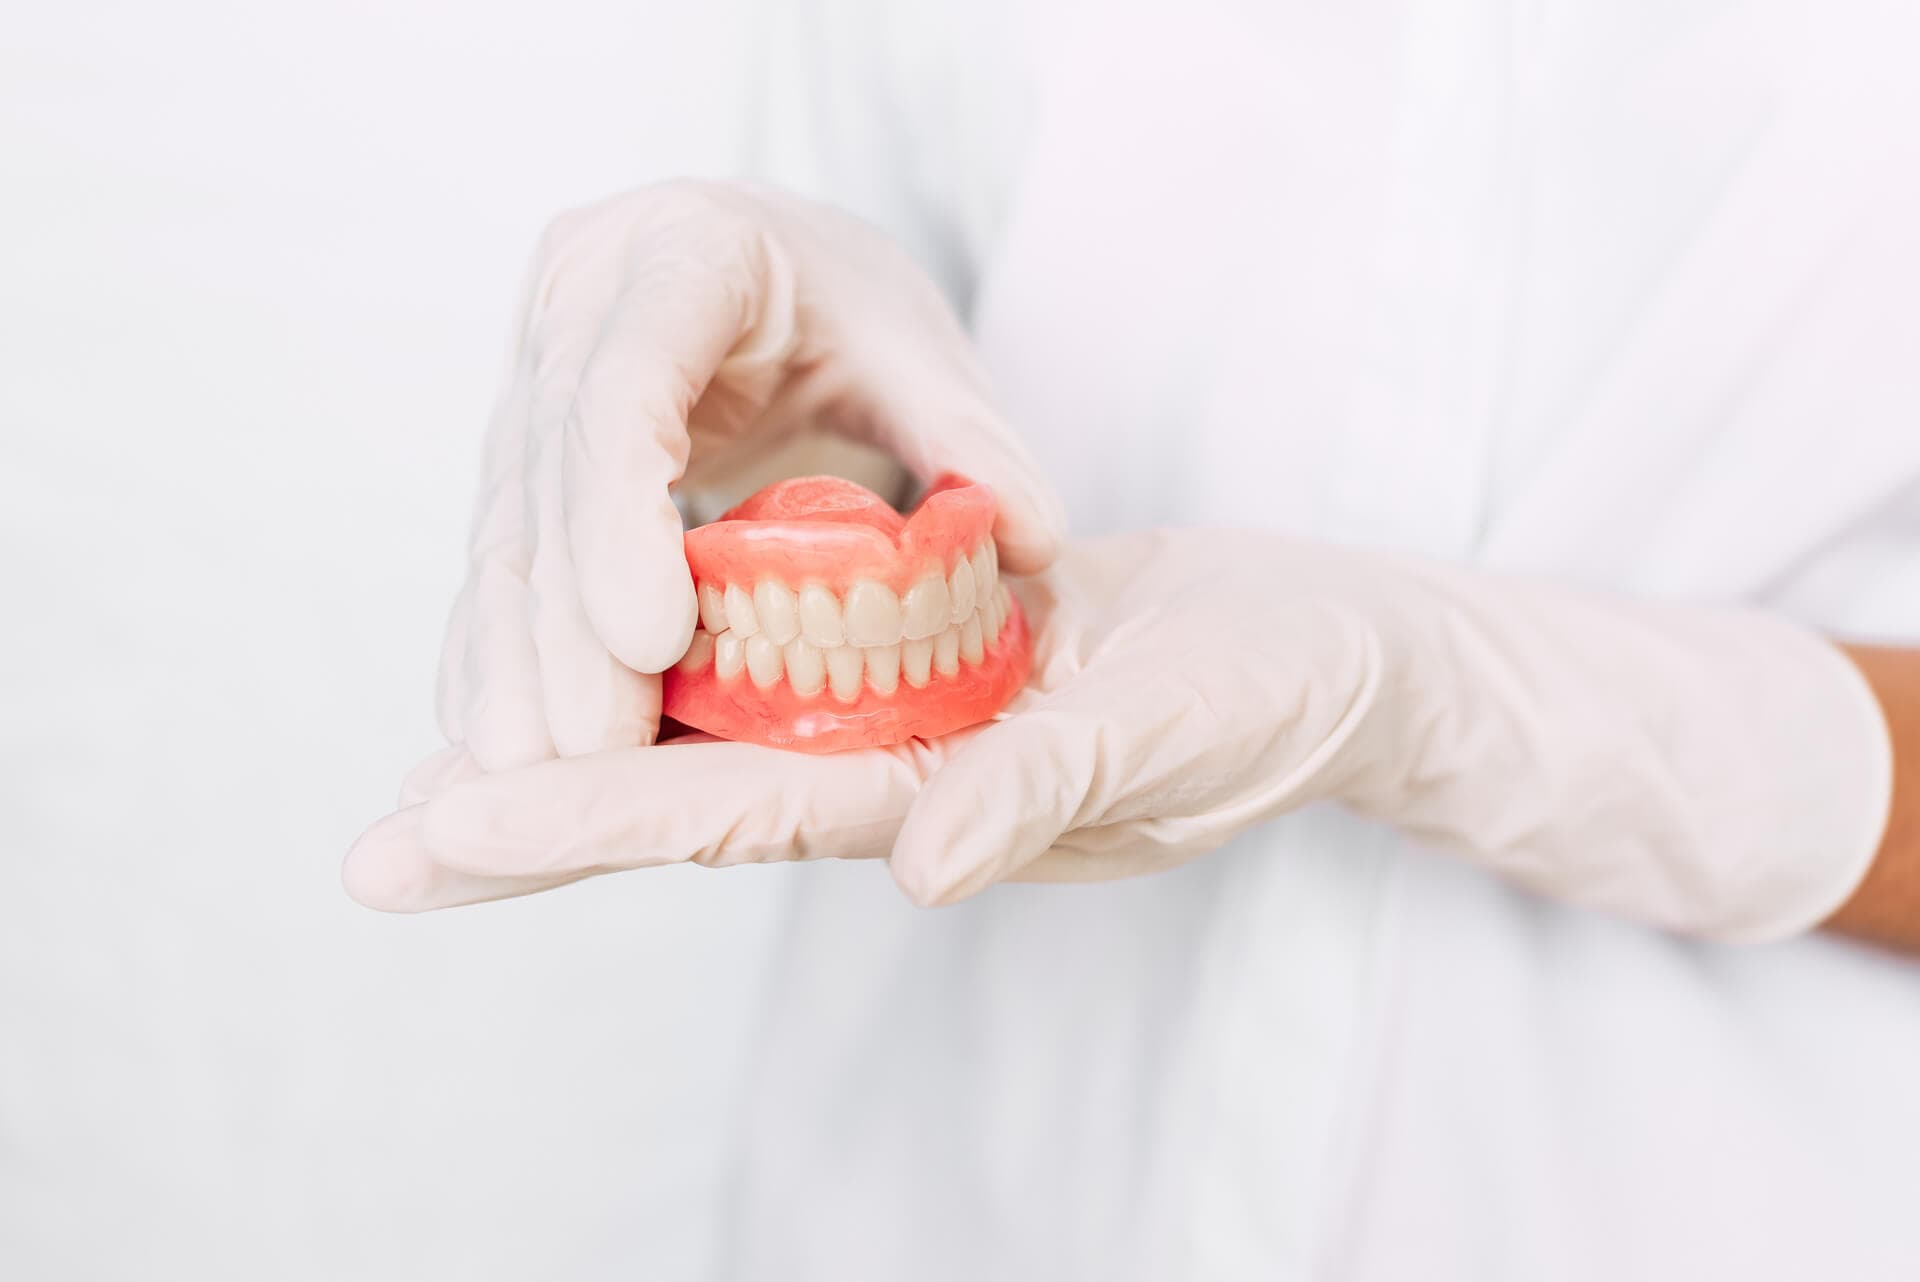 Centro Odontológico Dentine - Prótesis